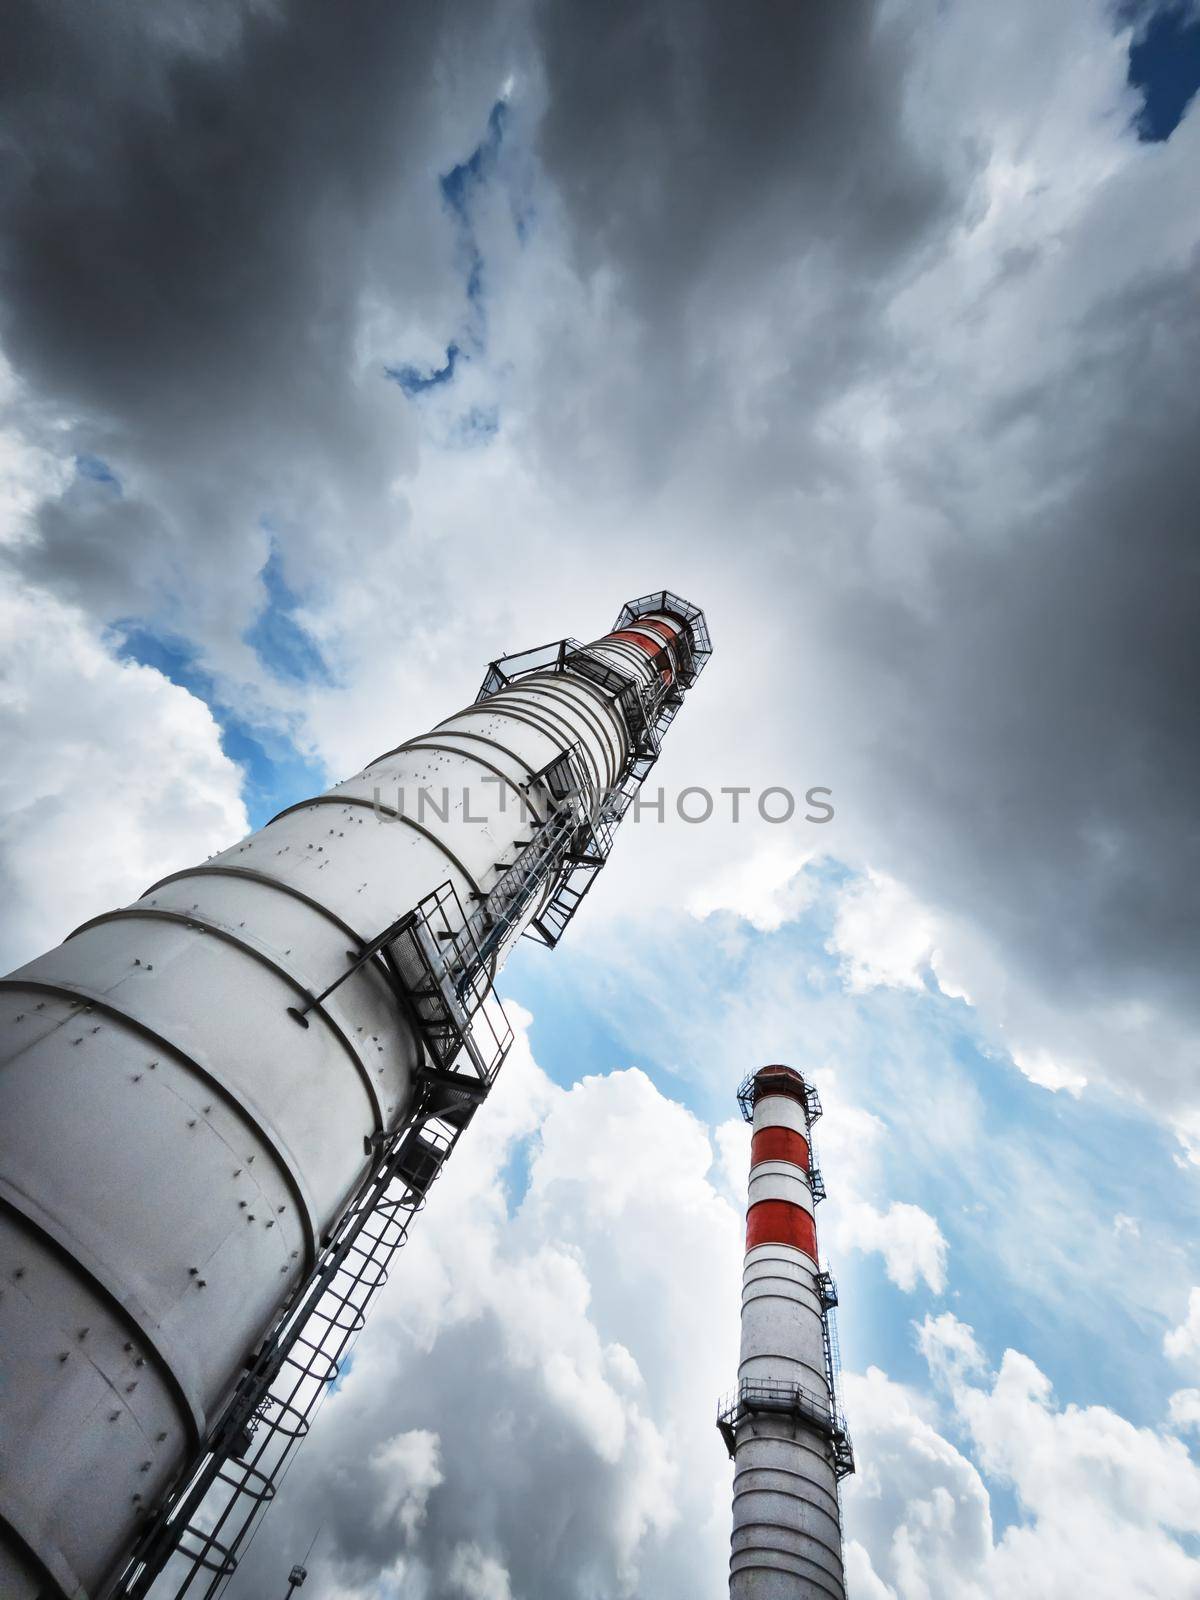 Two chimneys of the power plant diagonally by AlexGrec